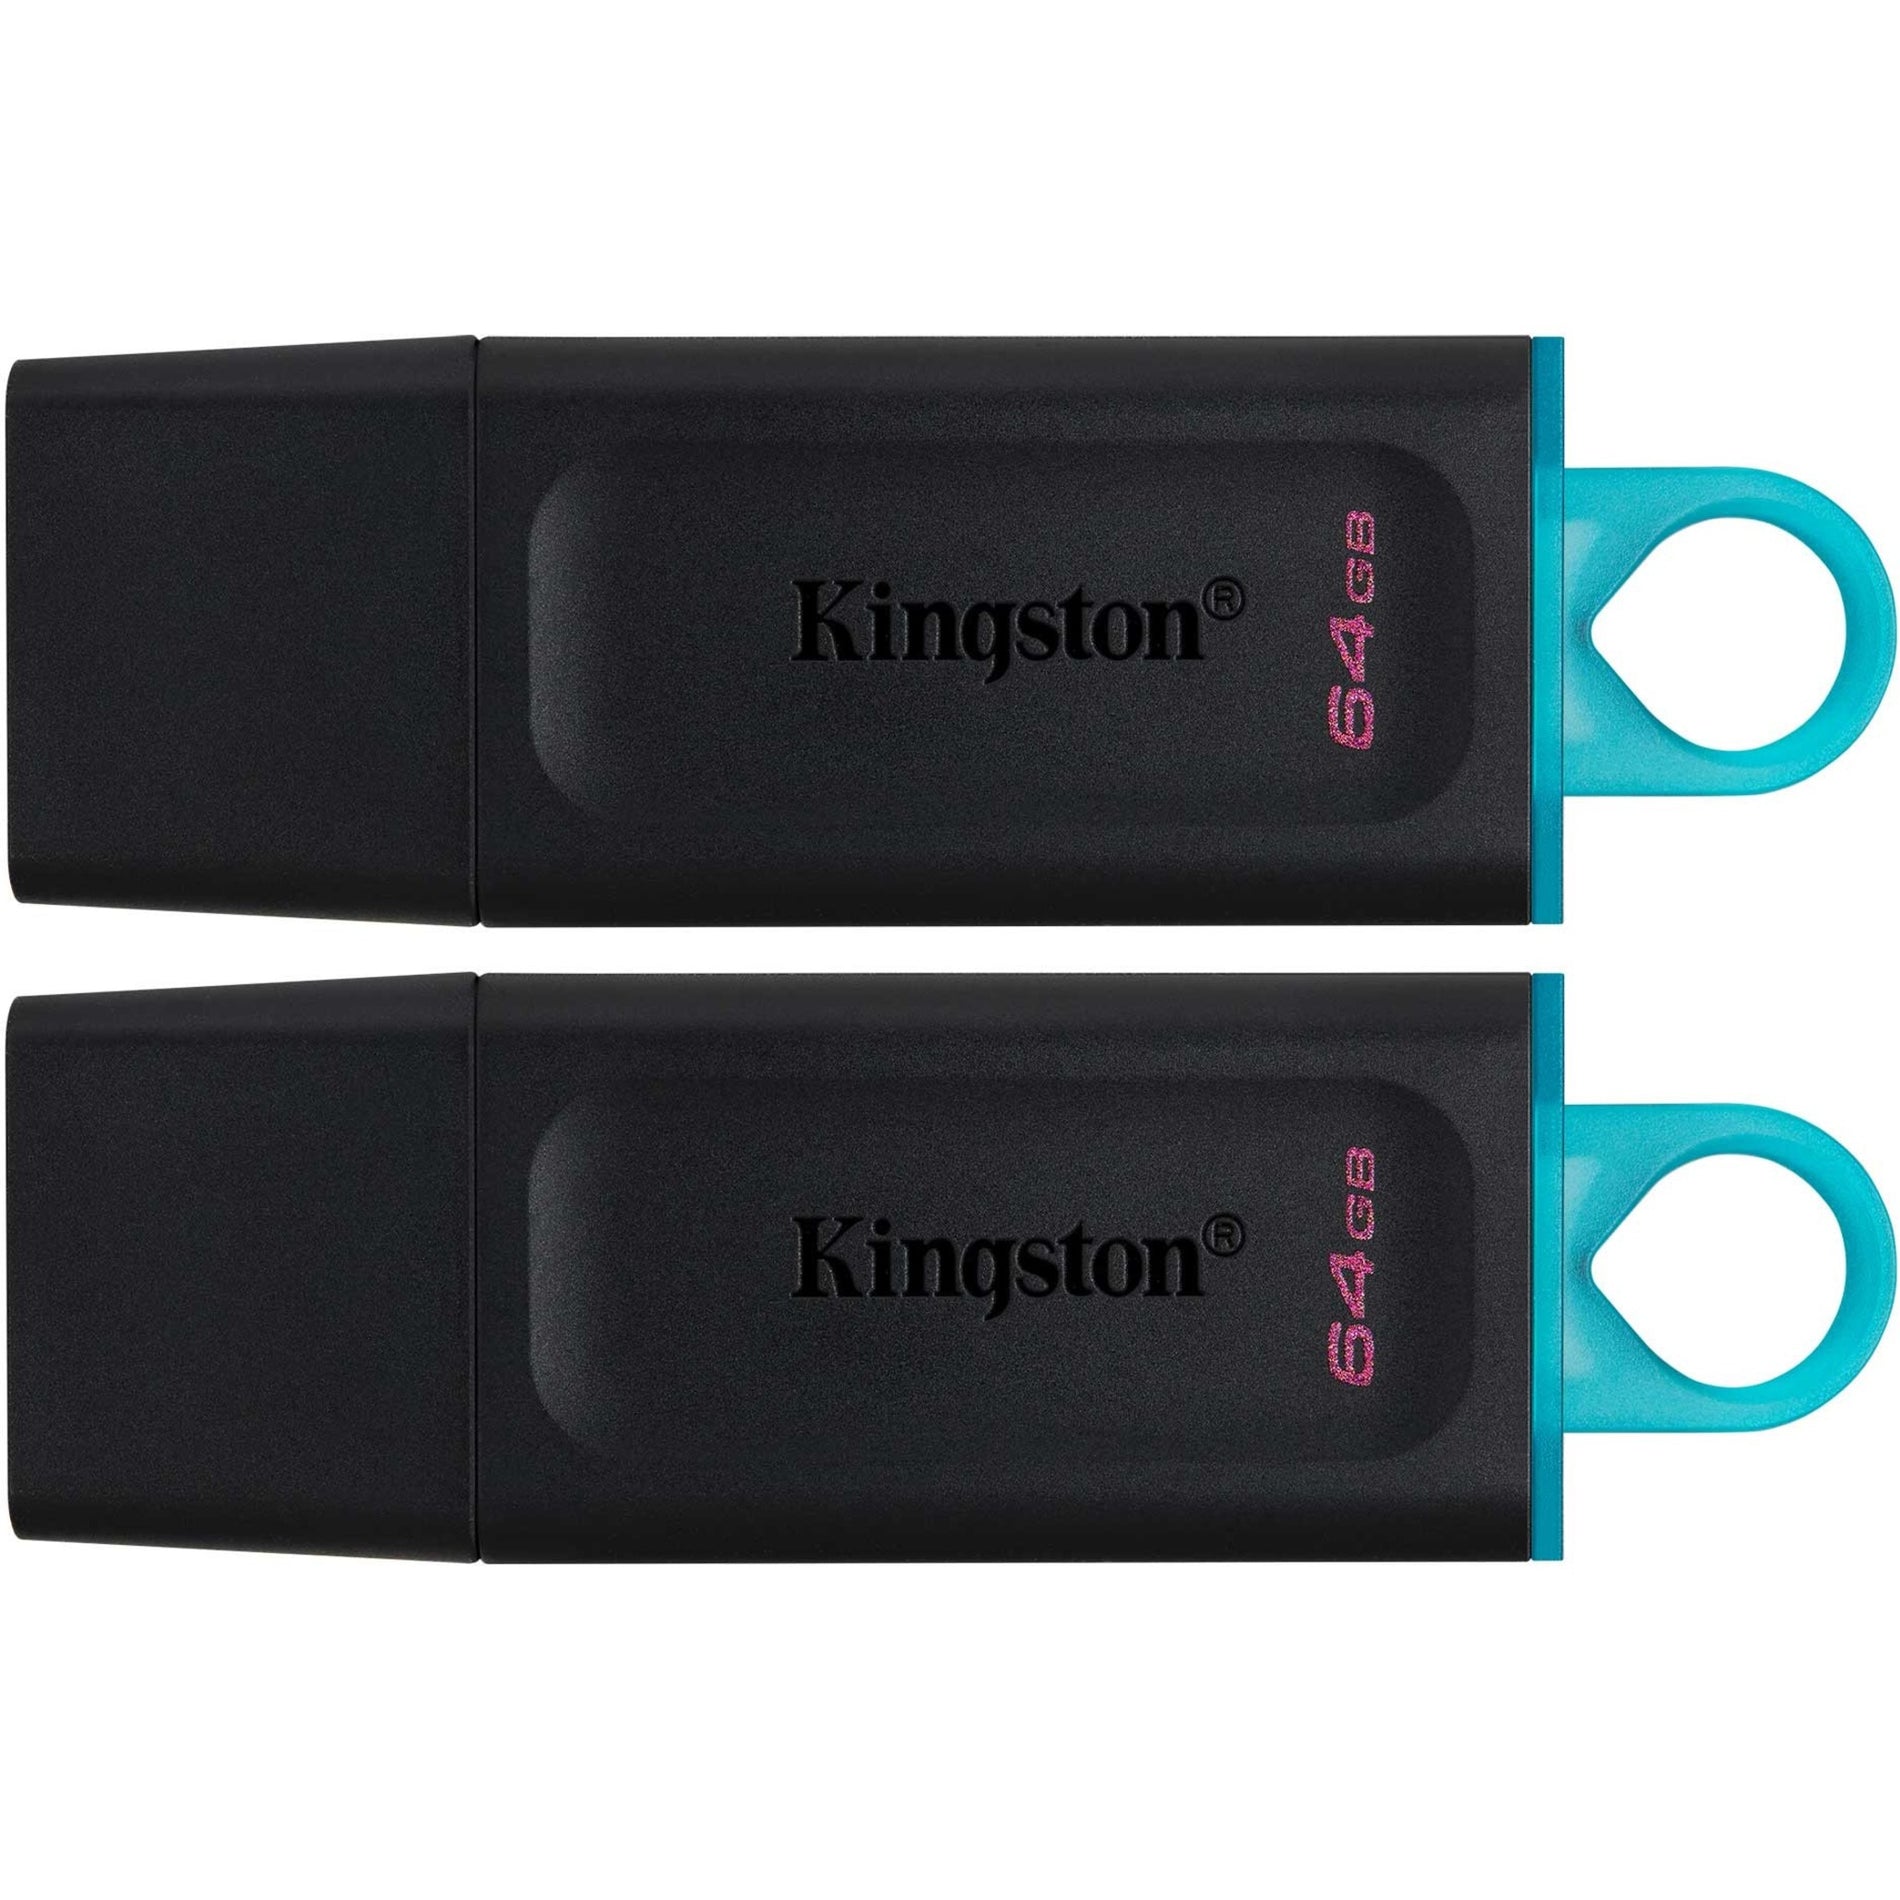 Kingston DTX/64GB-2P DataTraveler Exodia 64GB USB 3.2 (Gen 1) Flash Drive, Lightweight, Teal and Black